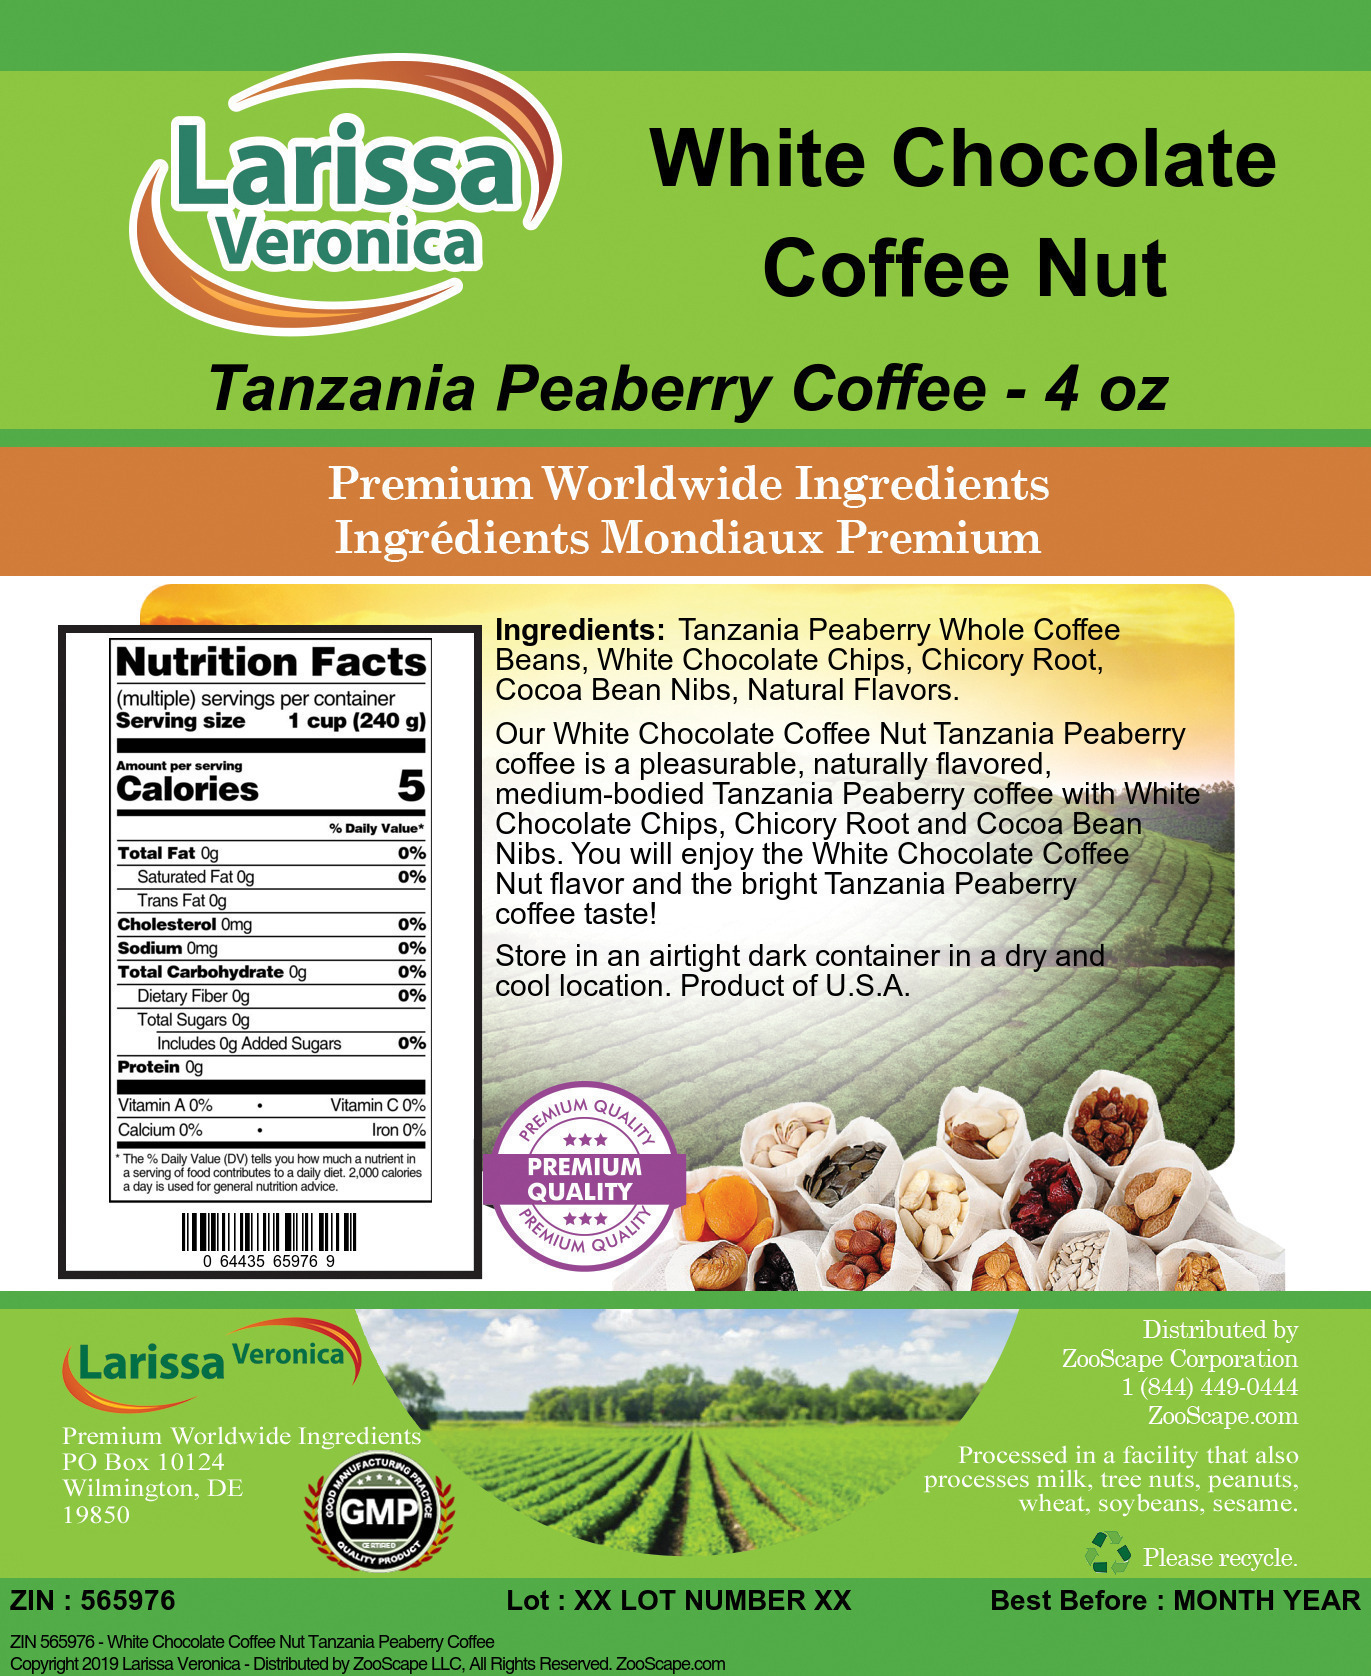 White Chocolate Coffee Nut Tanzania Peaberry Coffee - Label